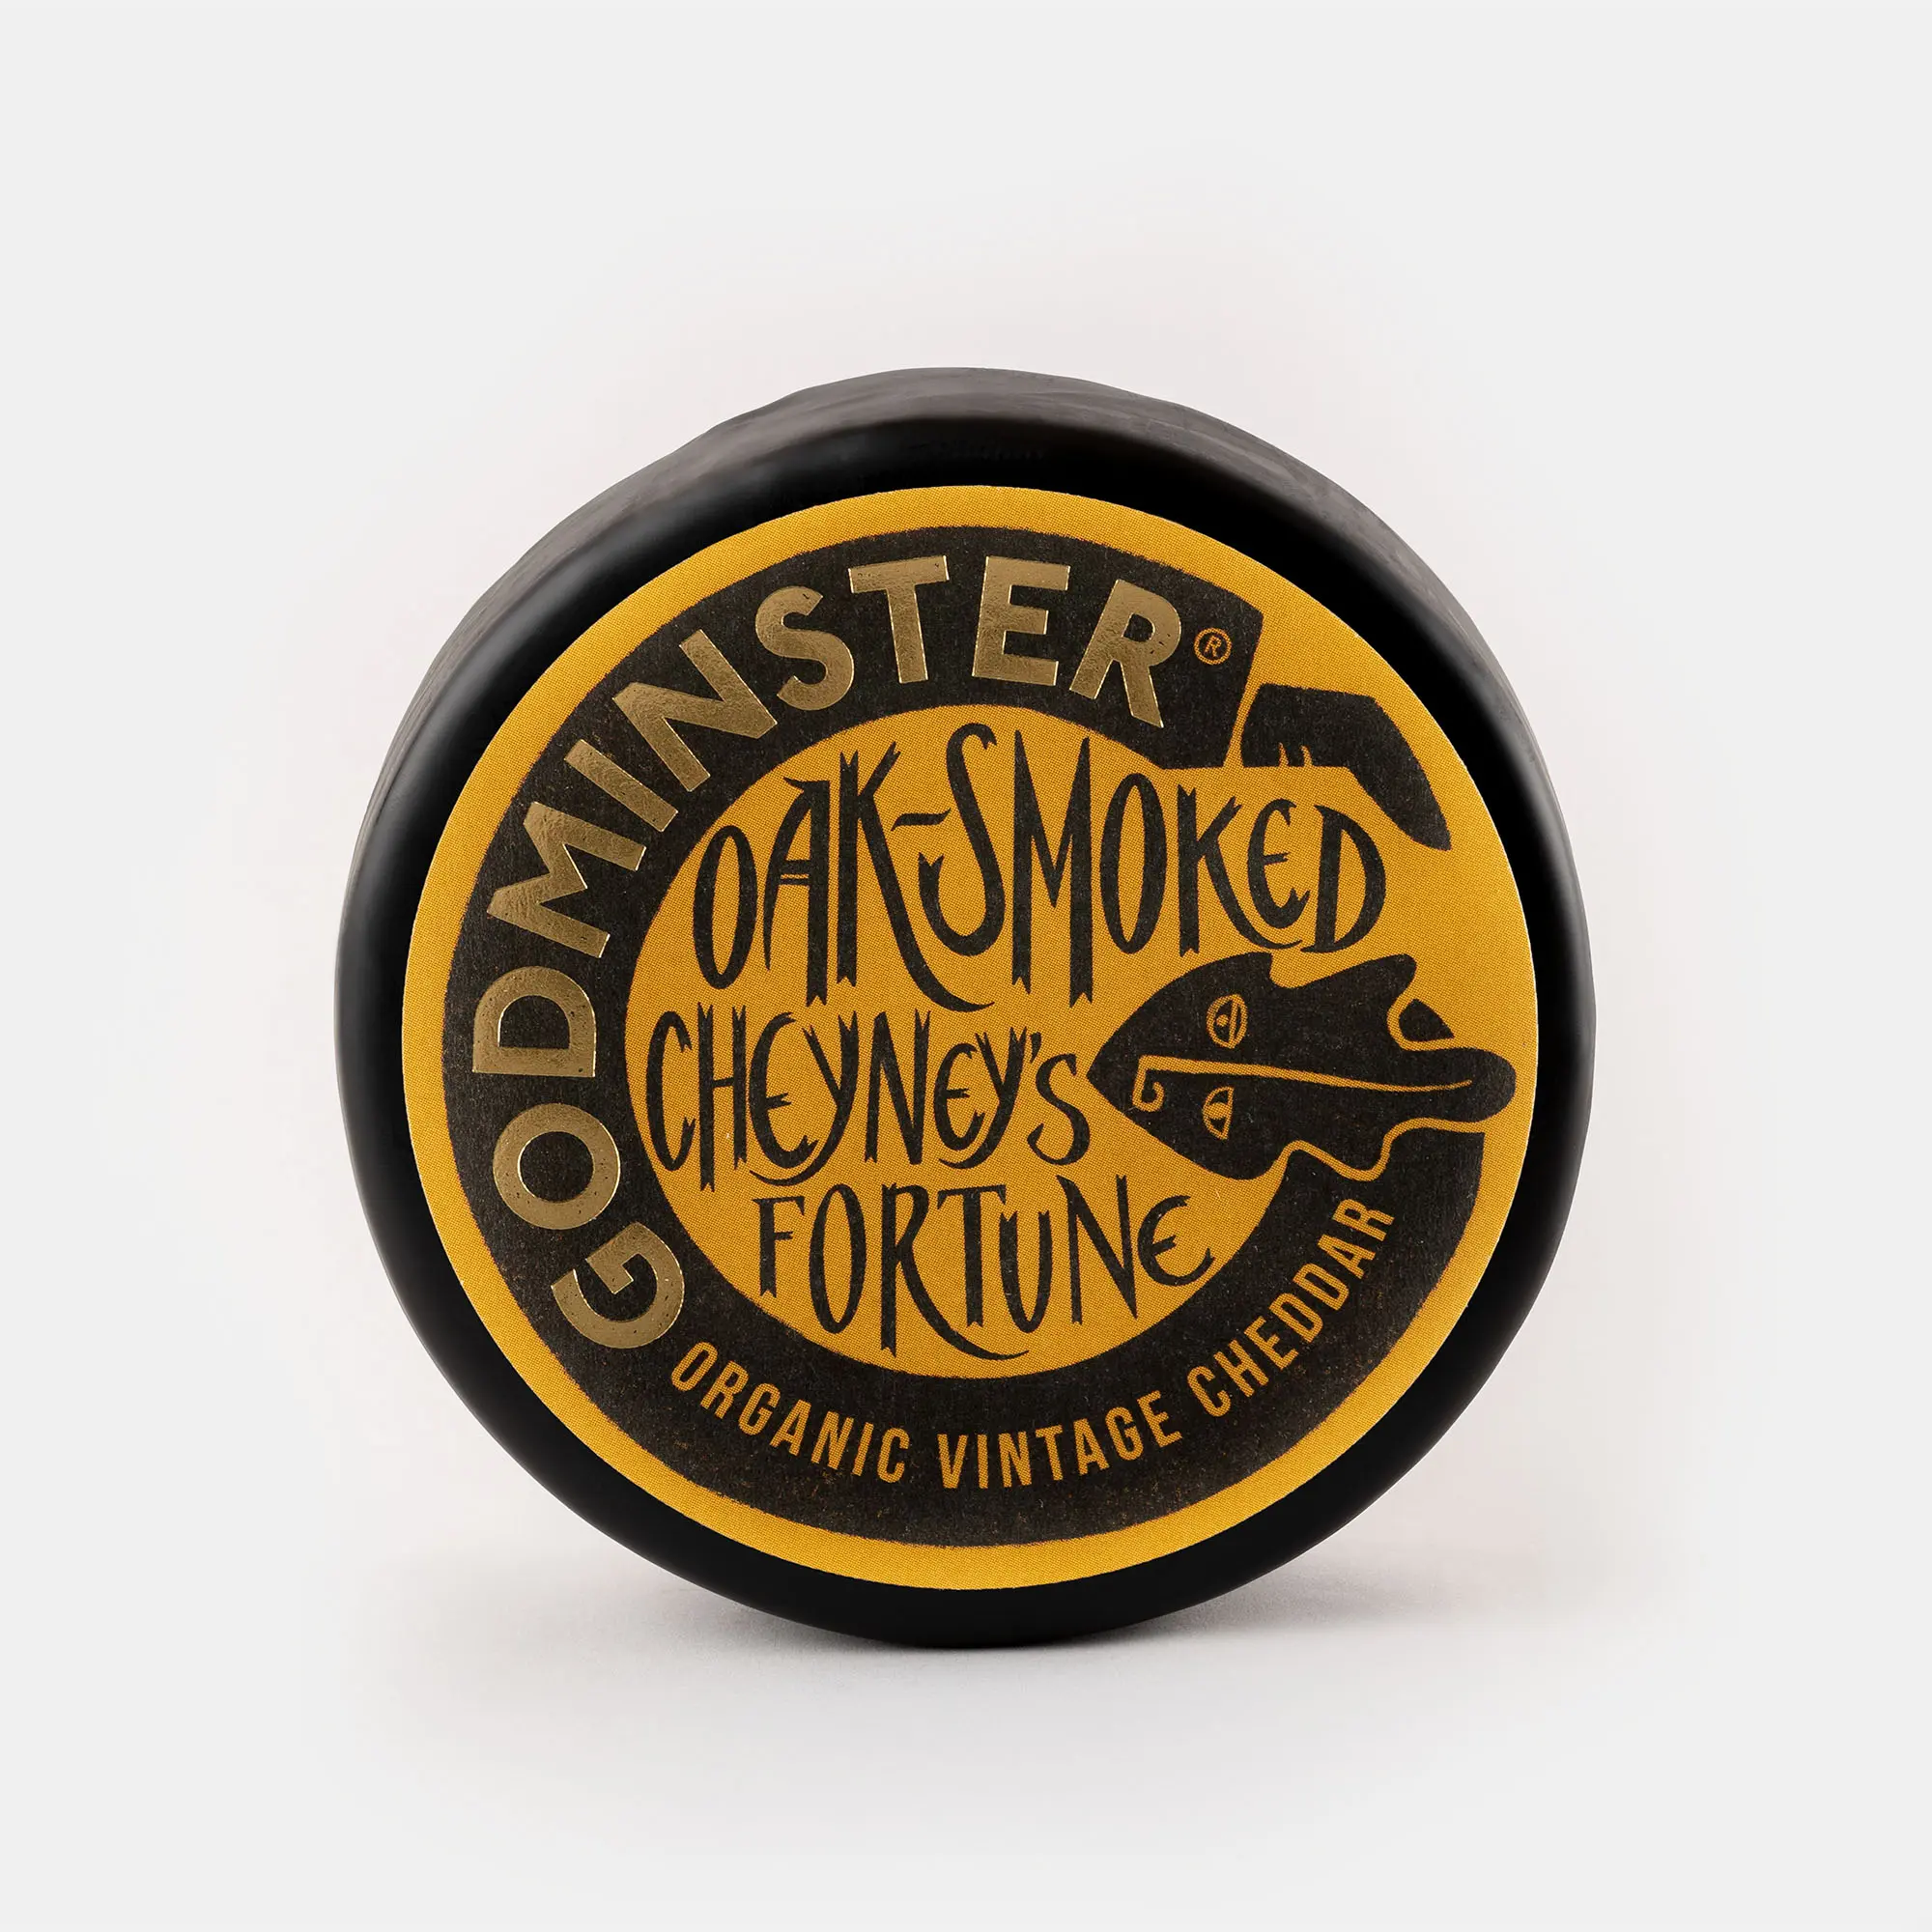 smoked godminster - Can you smoke Gruyere